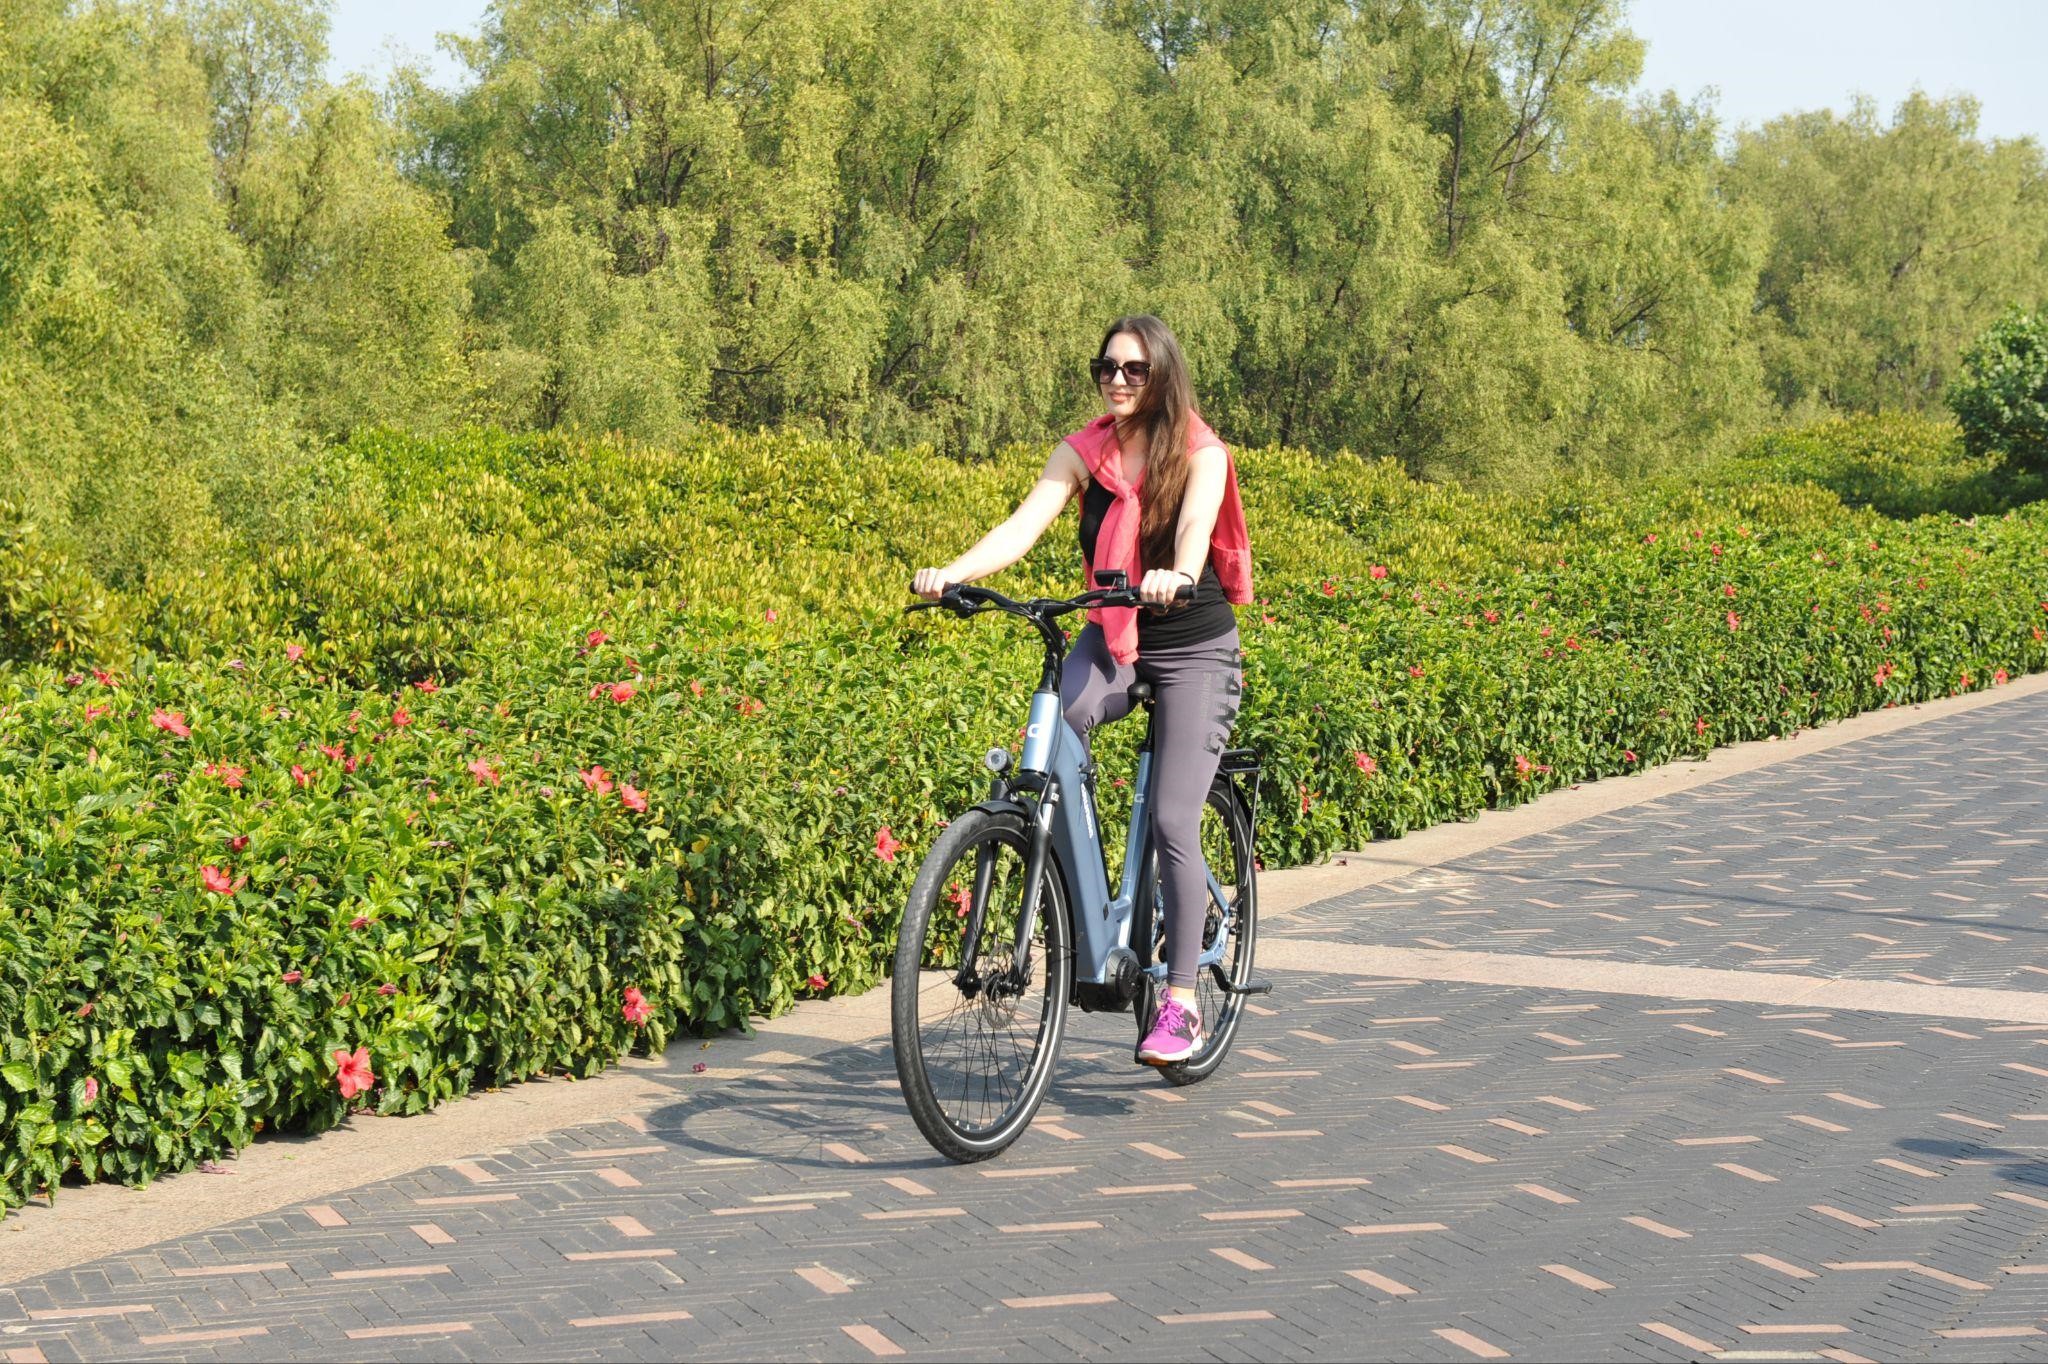 An image of a woman riding an e-bike.